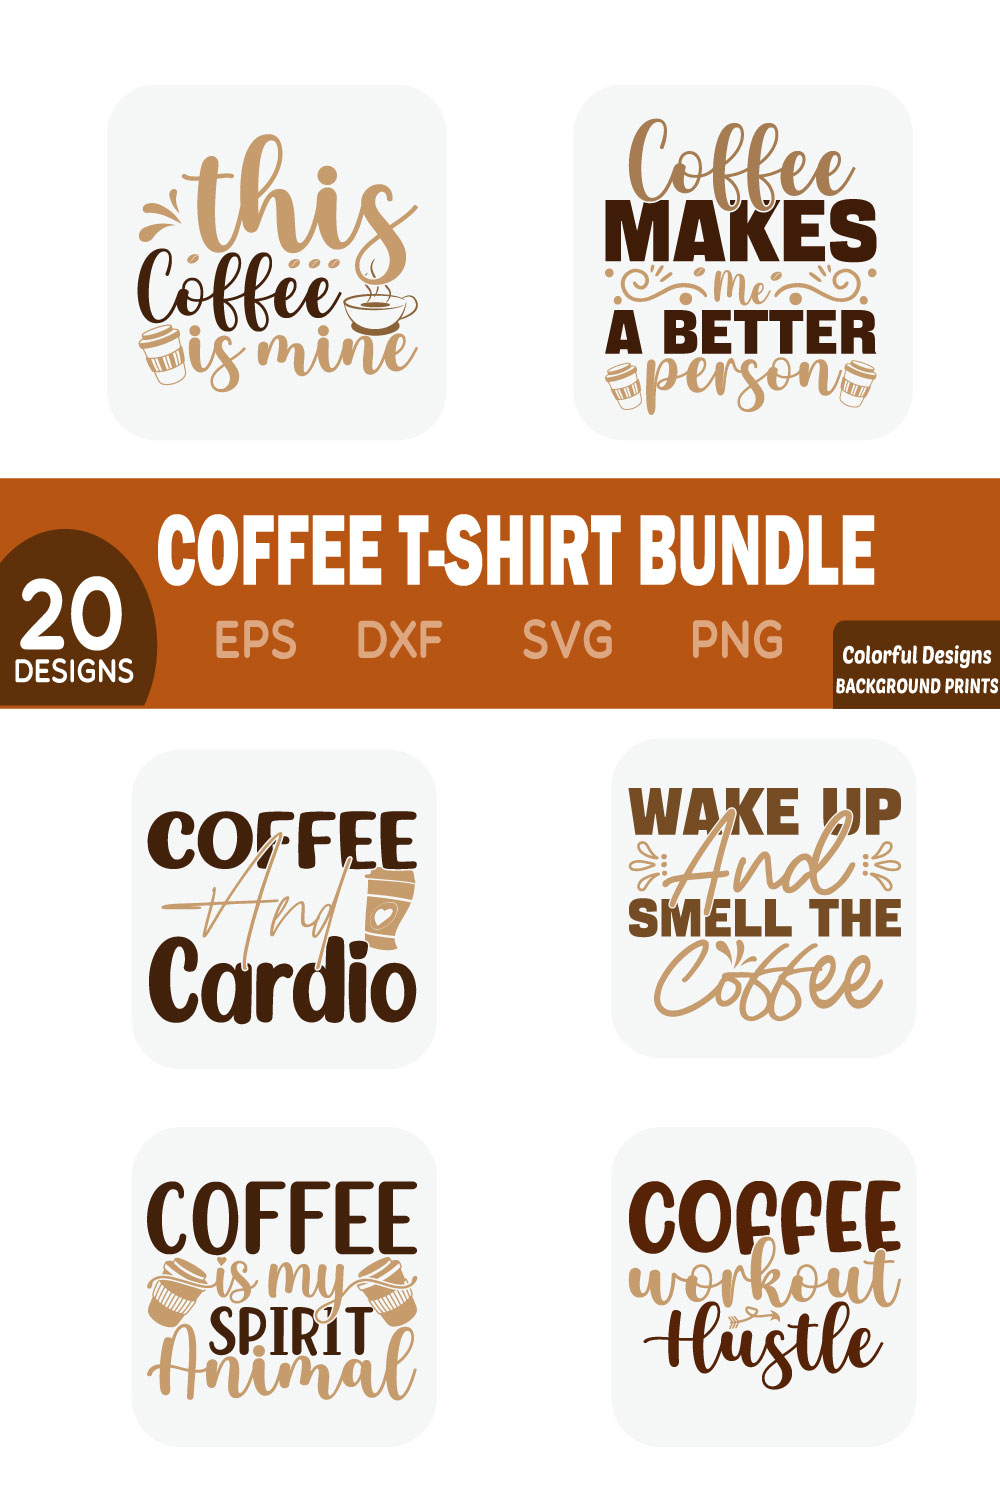 Coffee t-shirt Bundle pinterest preview image.